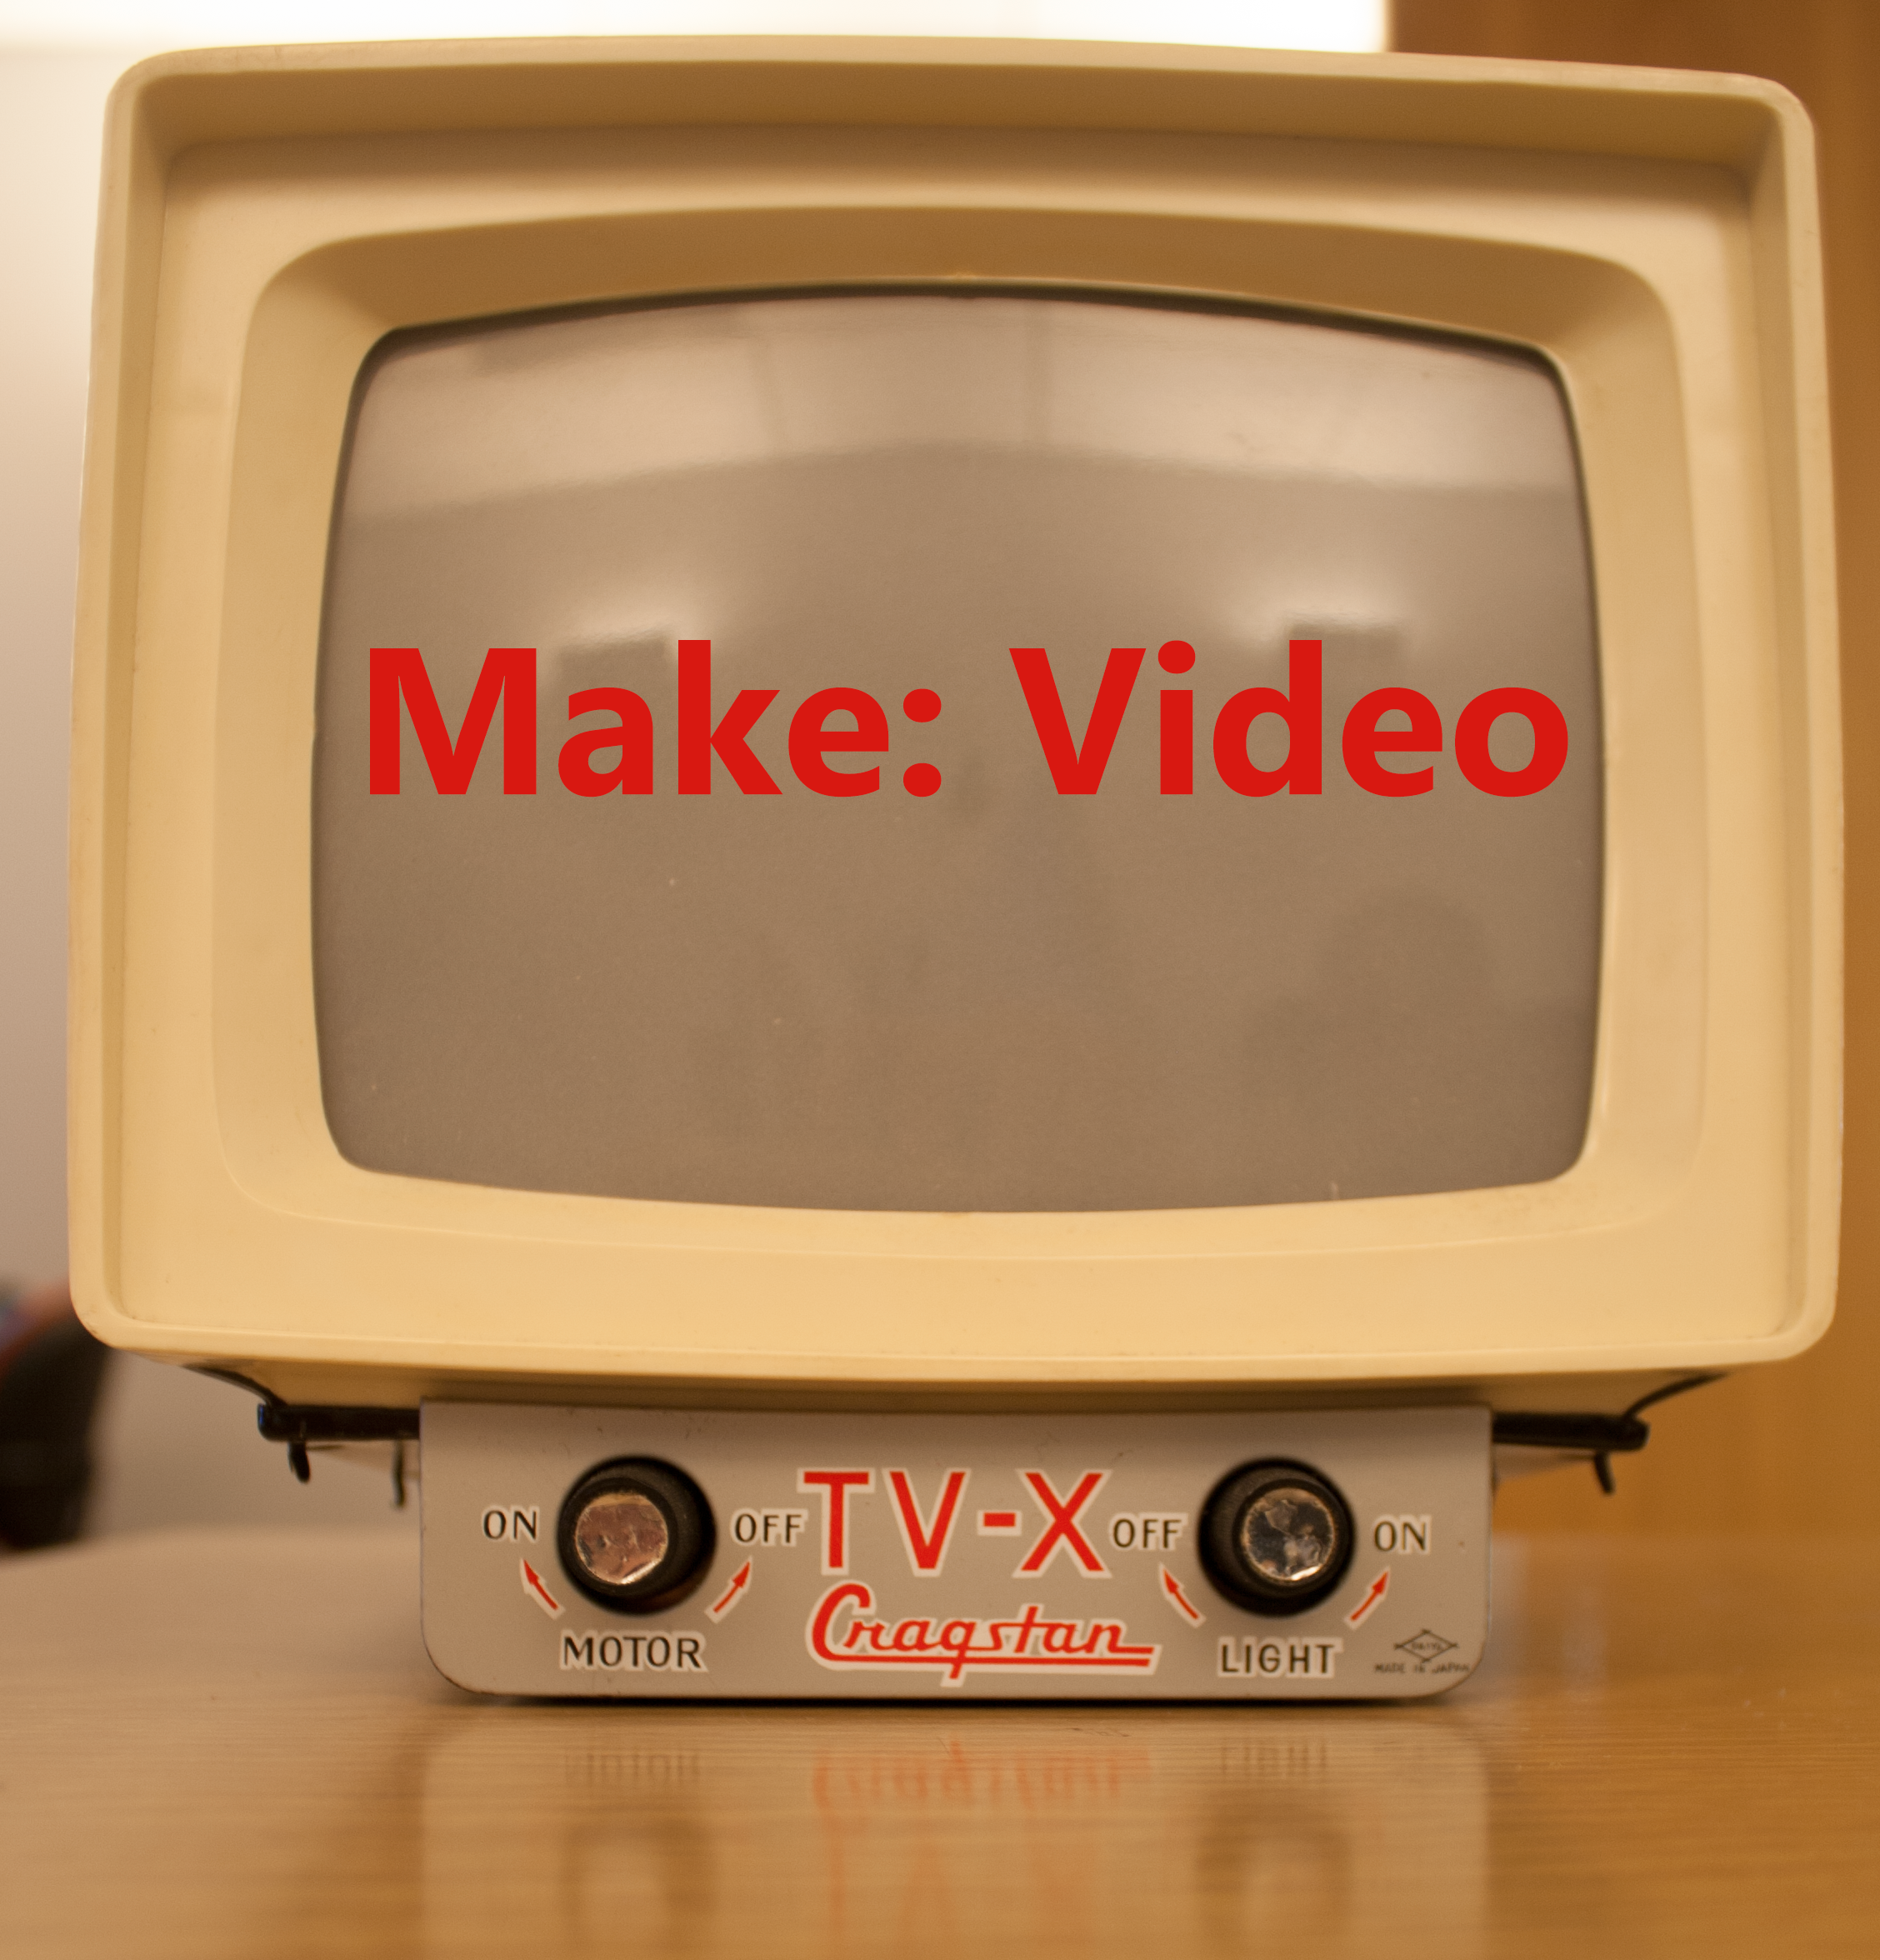 Make: Video